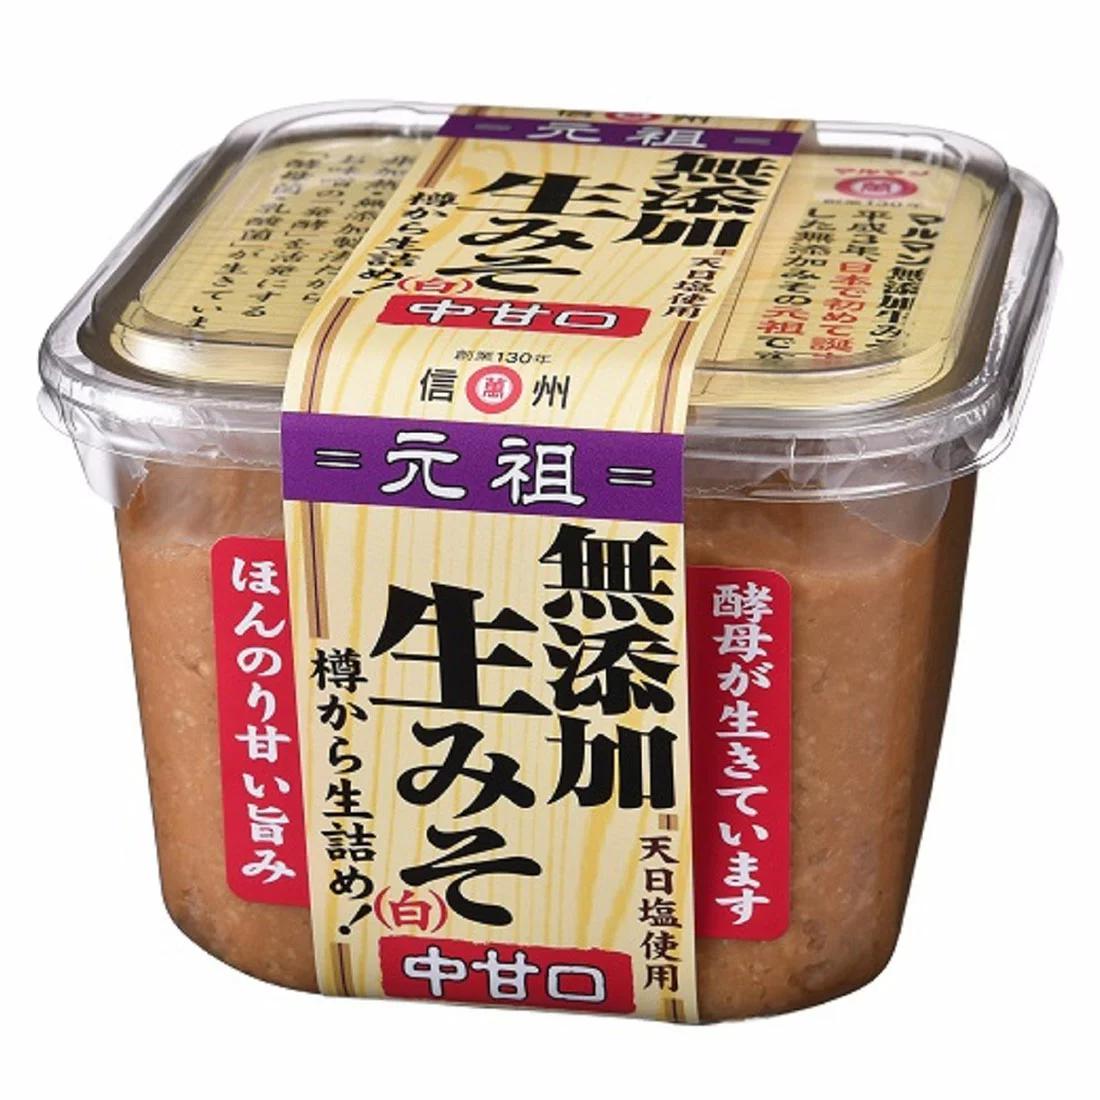 Maruman Mutenka Natural Nama Shiro White Miso Paste 750g, Japanese Taste